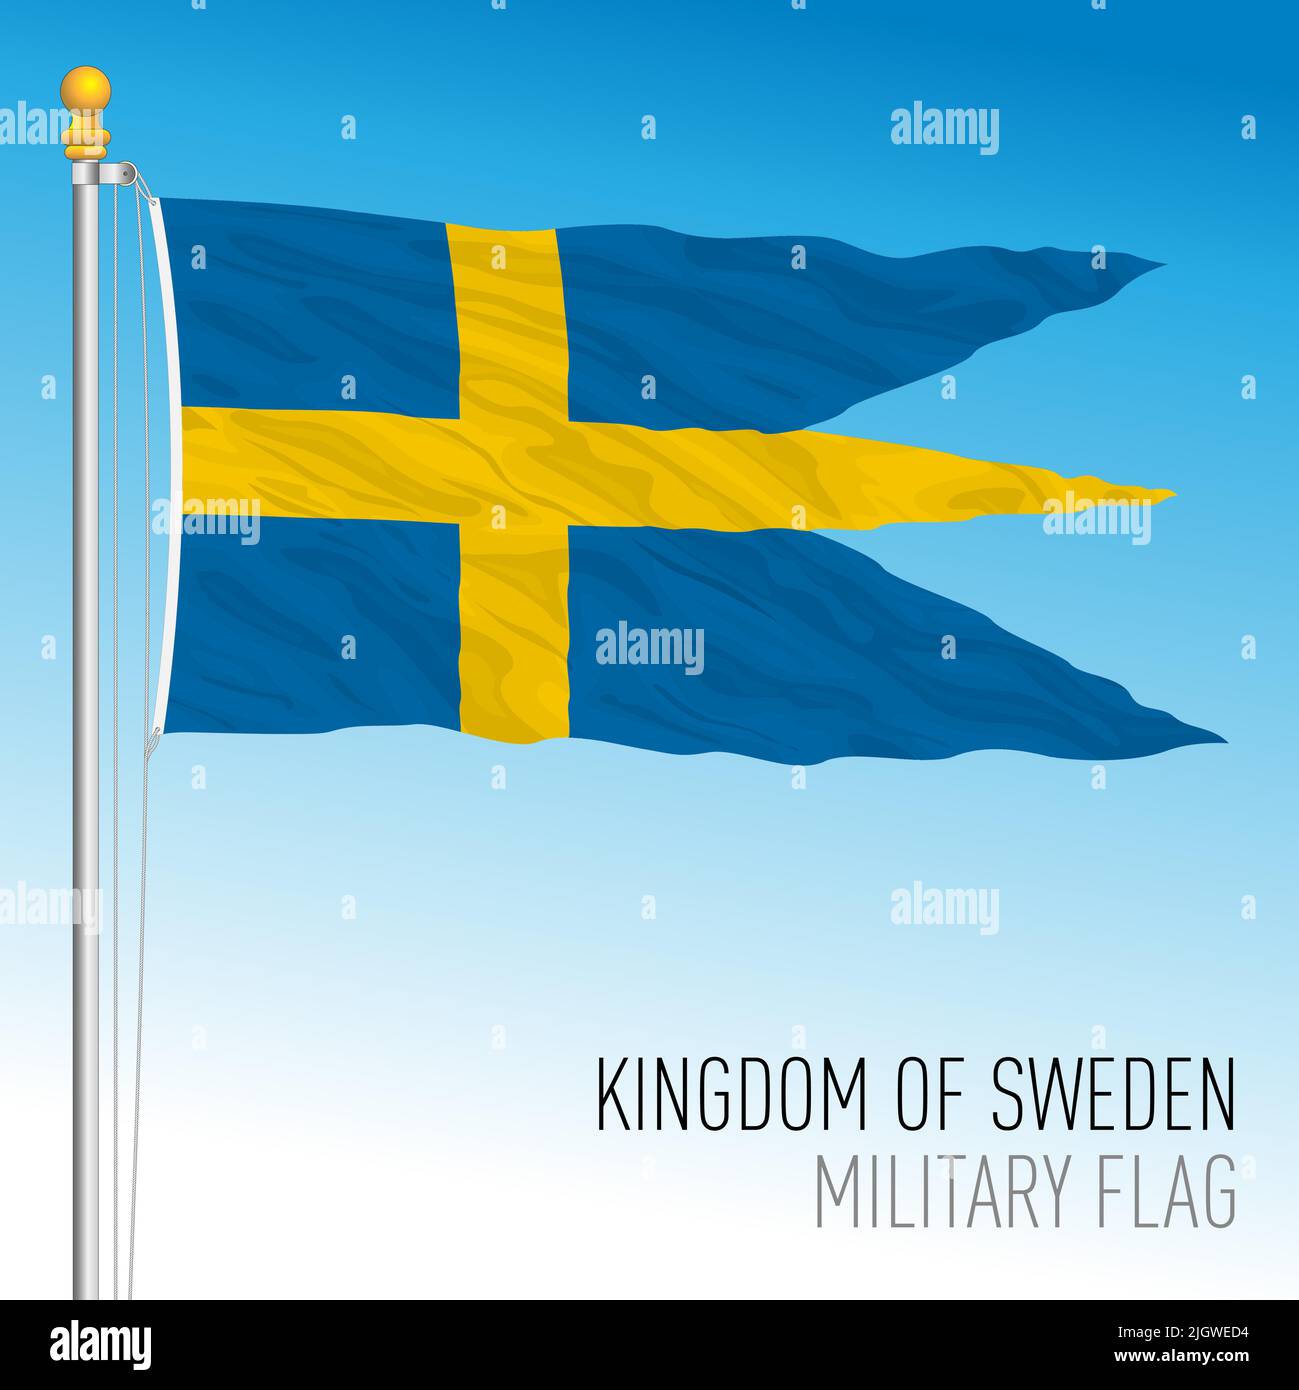 Swedish Military flag, Kingdom of Sweden, European Union, vector illustration Stock Vector